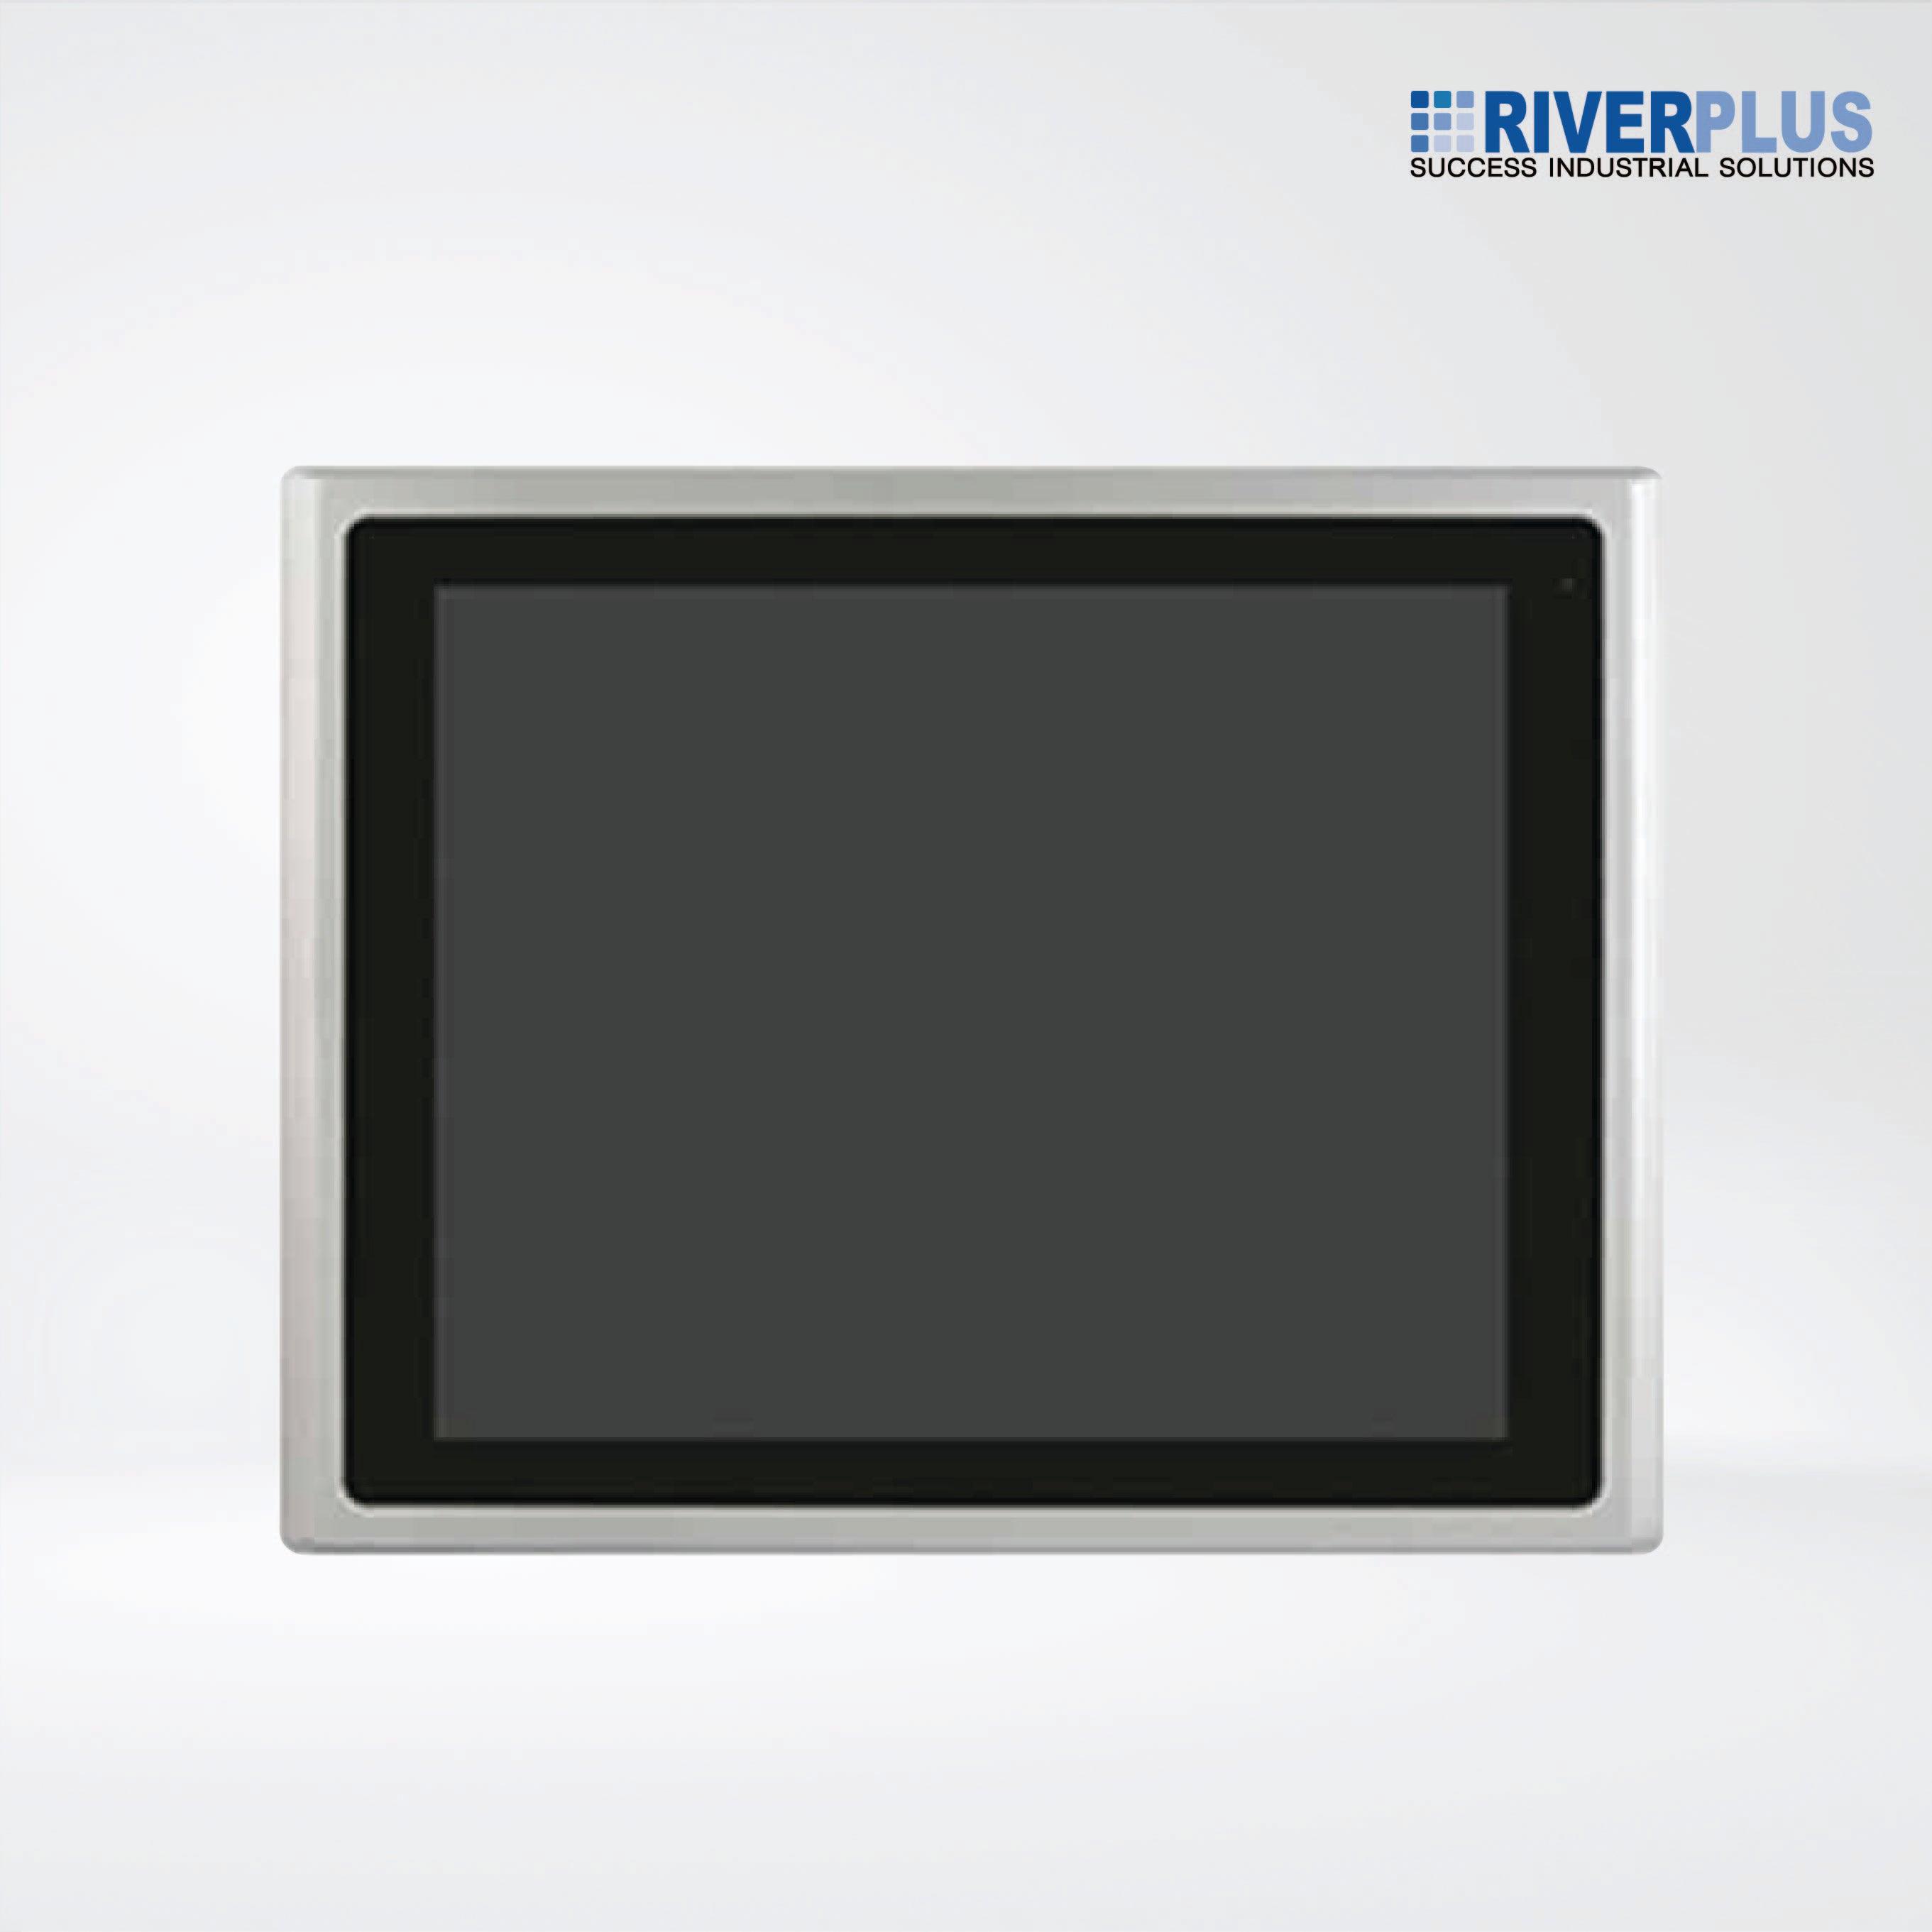 ARCHMI-912AP Intel 6th Gen. Core i3/i5, Fanless Industrial Compact Size Panel PC - Riverplus